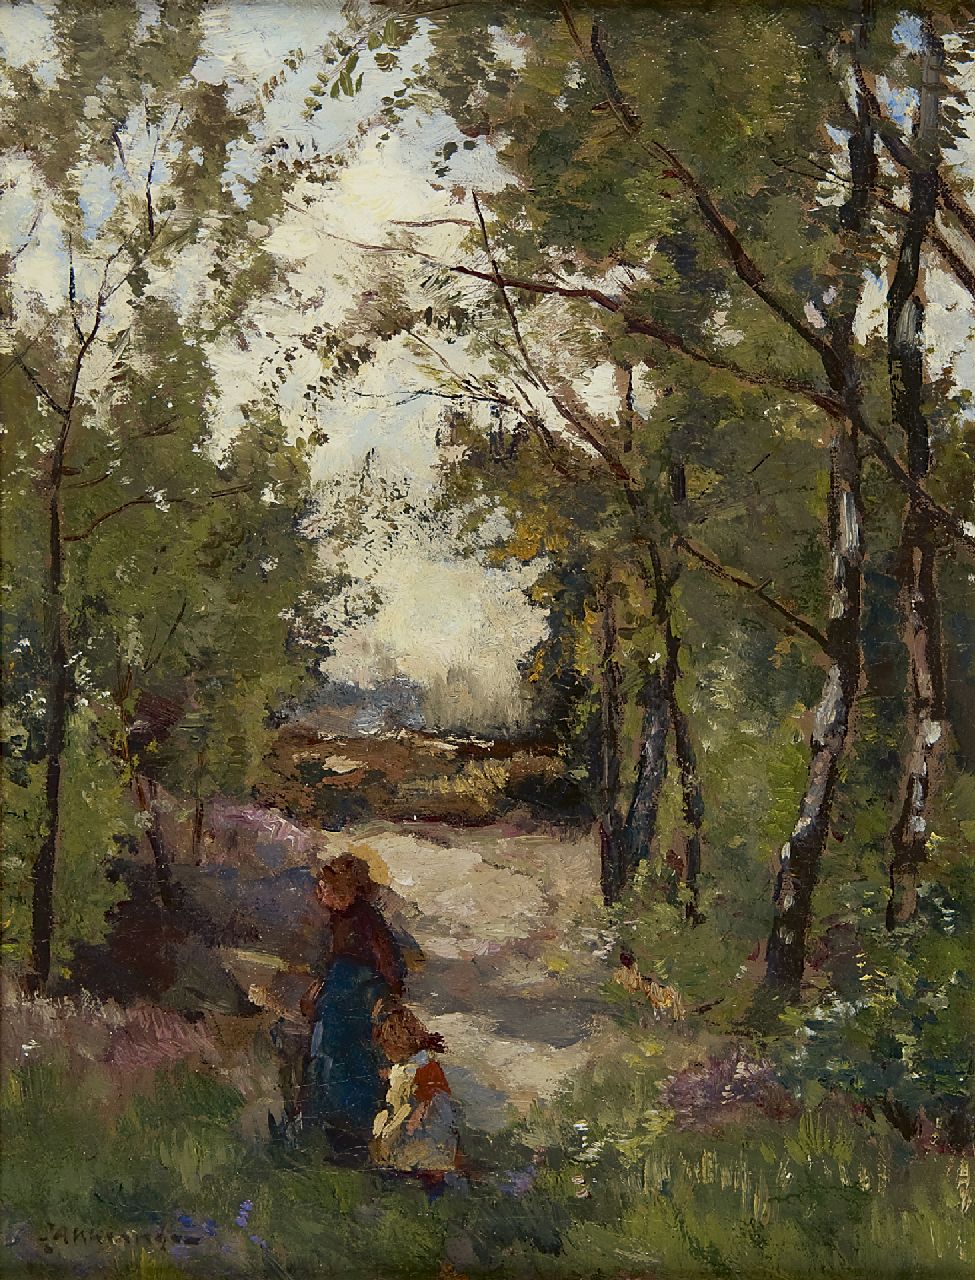 Akkeringa J.E.H.  | 'Johannes Evert' Hendrik Akkeringa, At mothers hand through the forest, Öl auf Leinwand 33,3 x 24,6 cm, signed l.l.